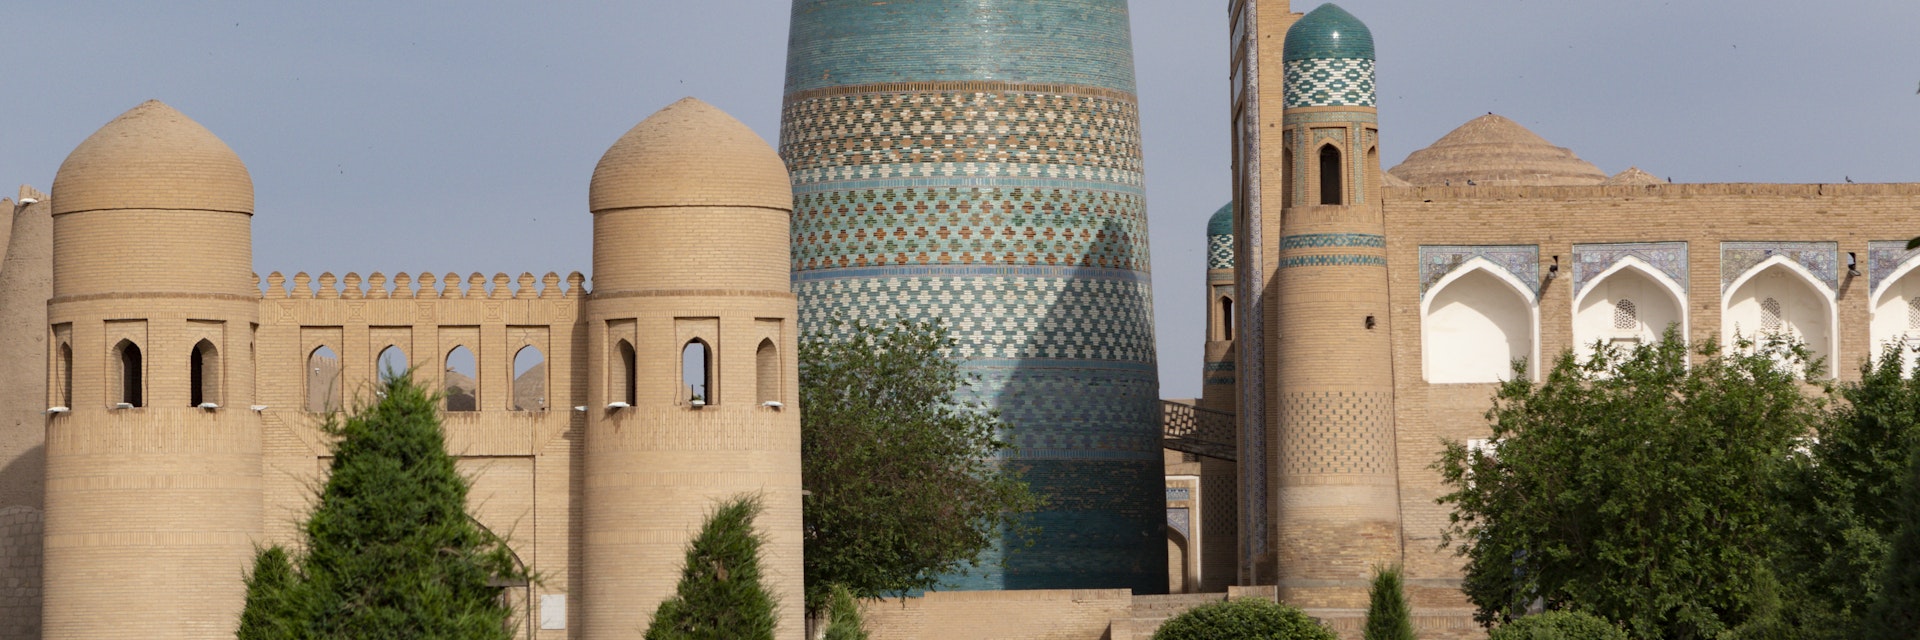 Kalta Minor minaret and city walls in Khiva, Uzbekistan.